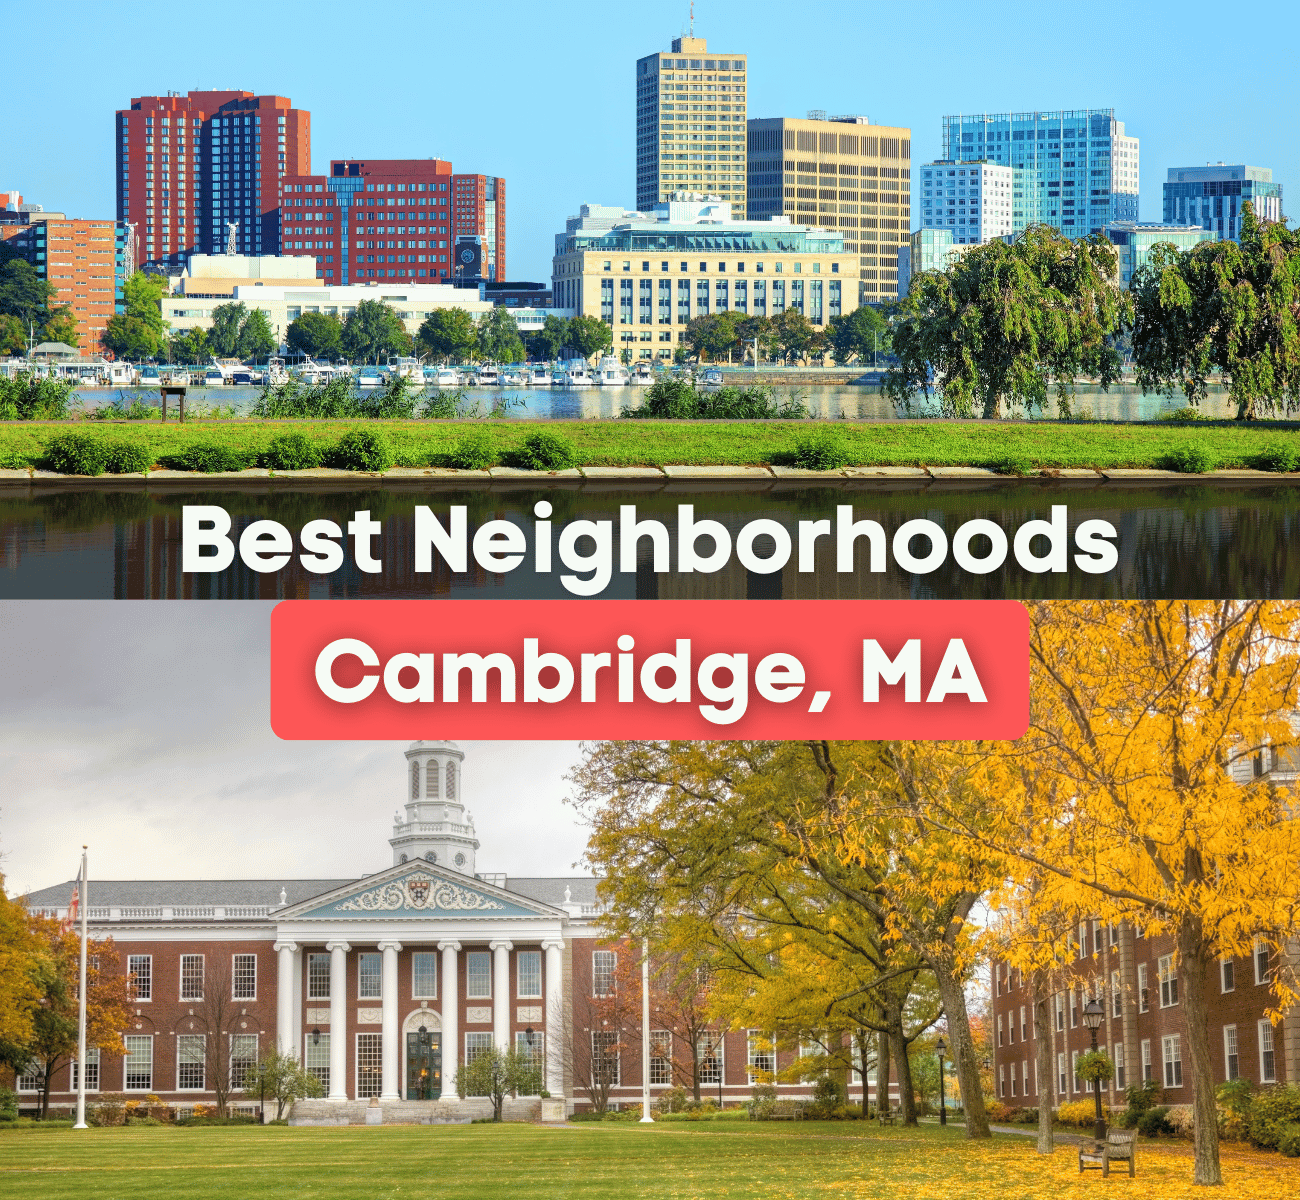 best neighborhoods in Cambridge, MA graphic - Harvard University and Cambridge waterfront